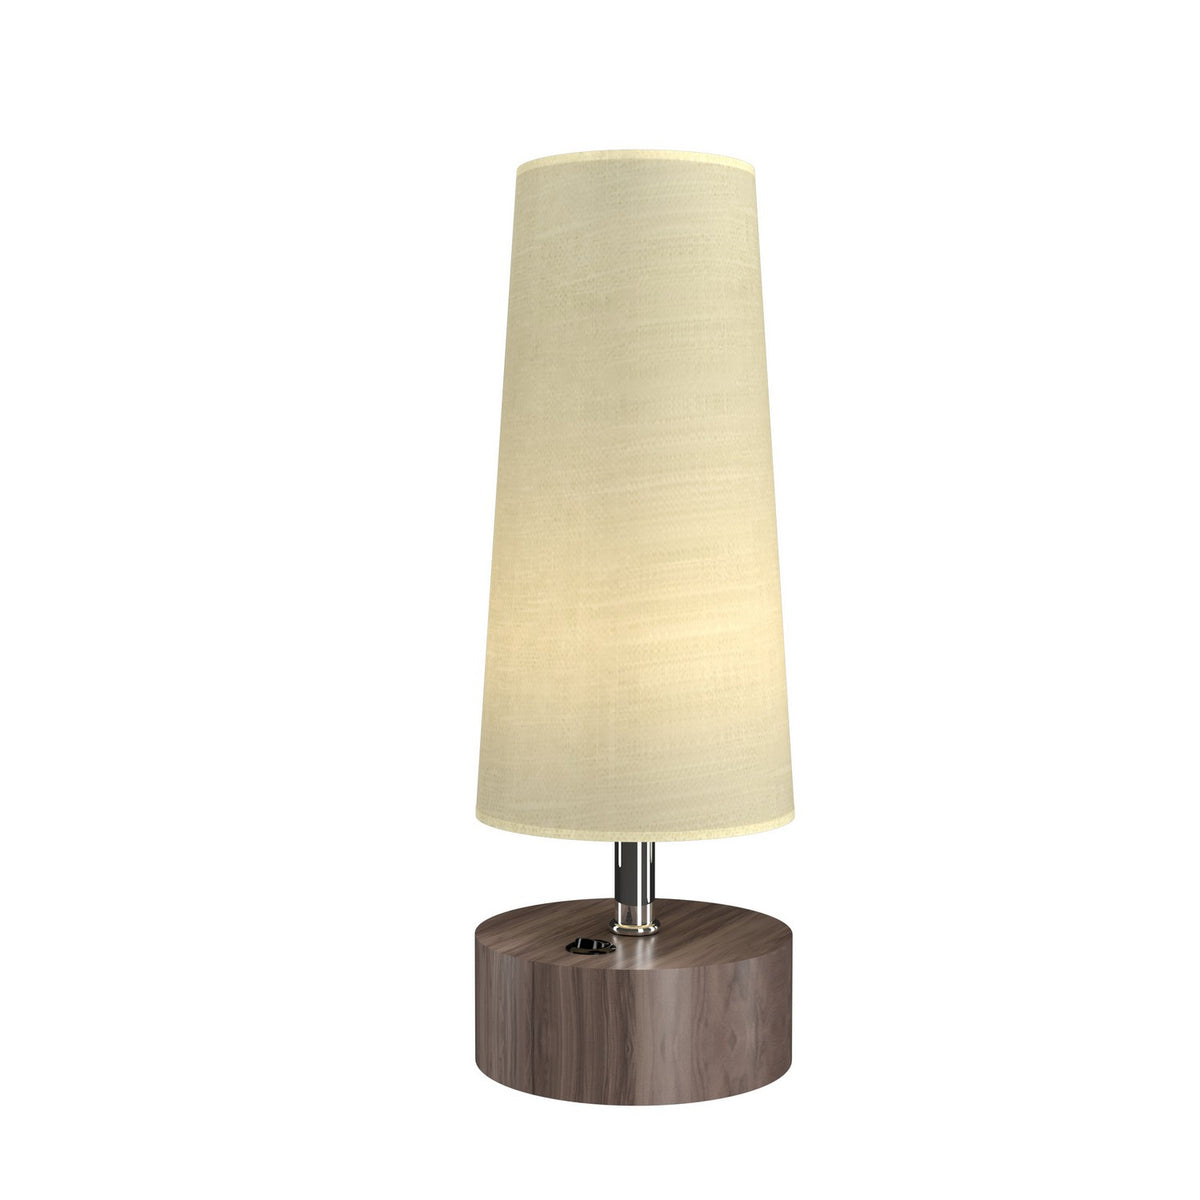 Accord Lighting - 7101.18 - LED Table Lamp - Clean - American Walnut